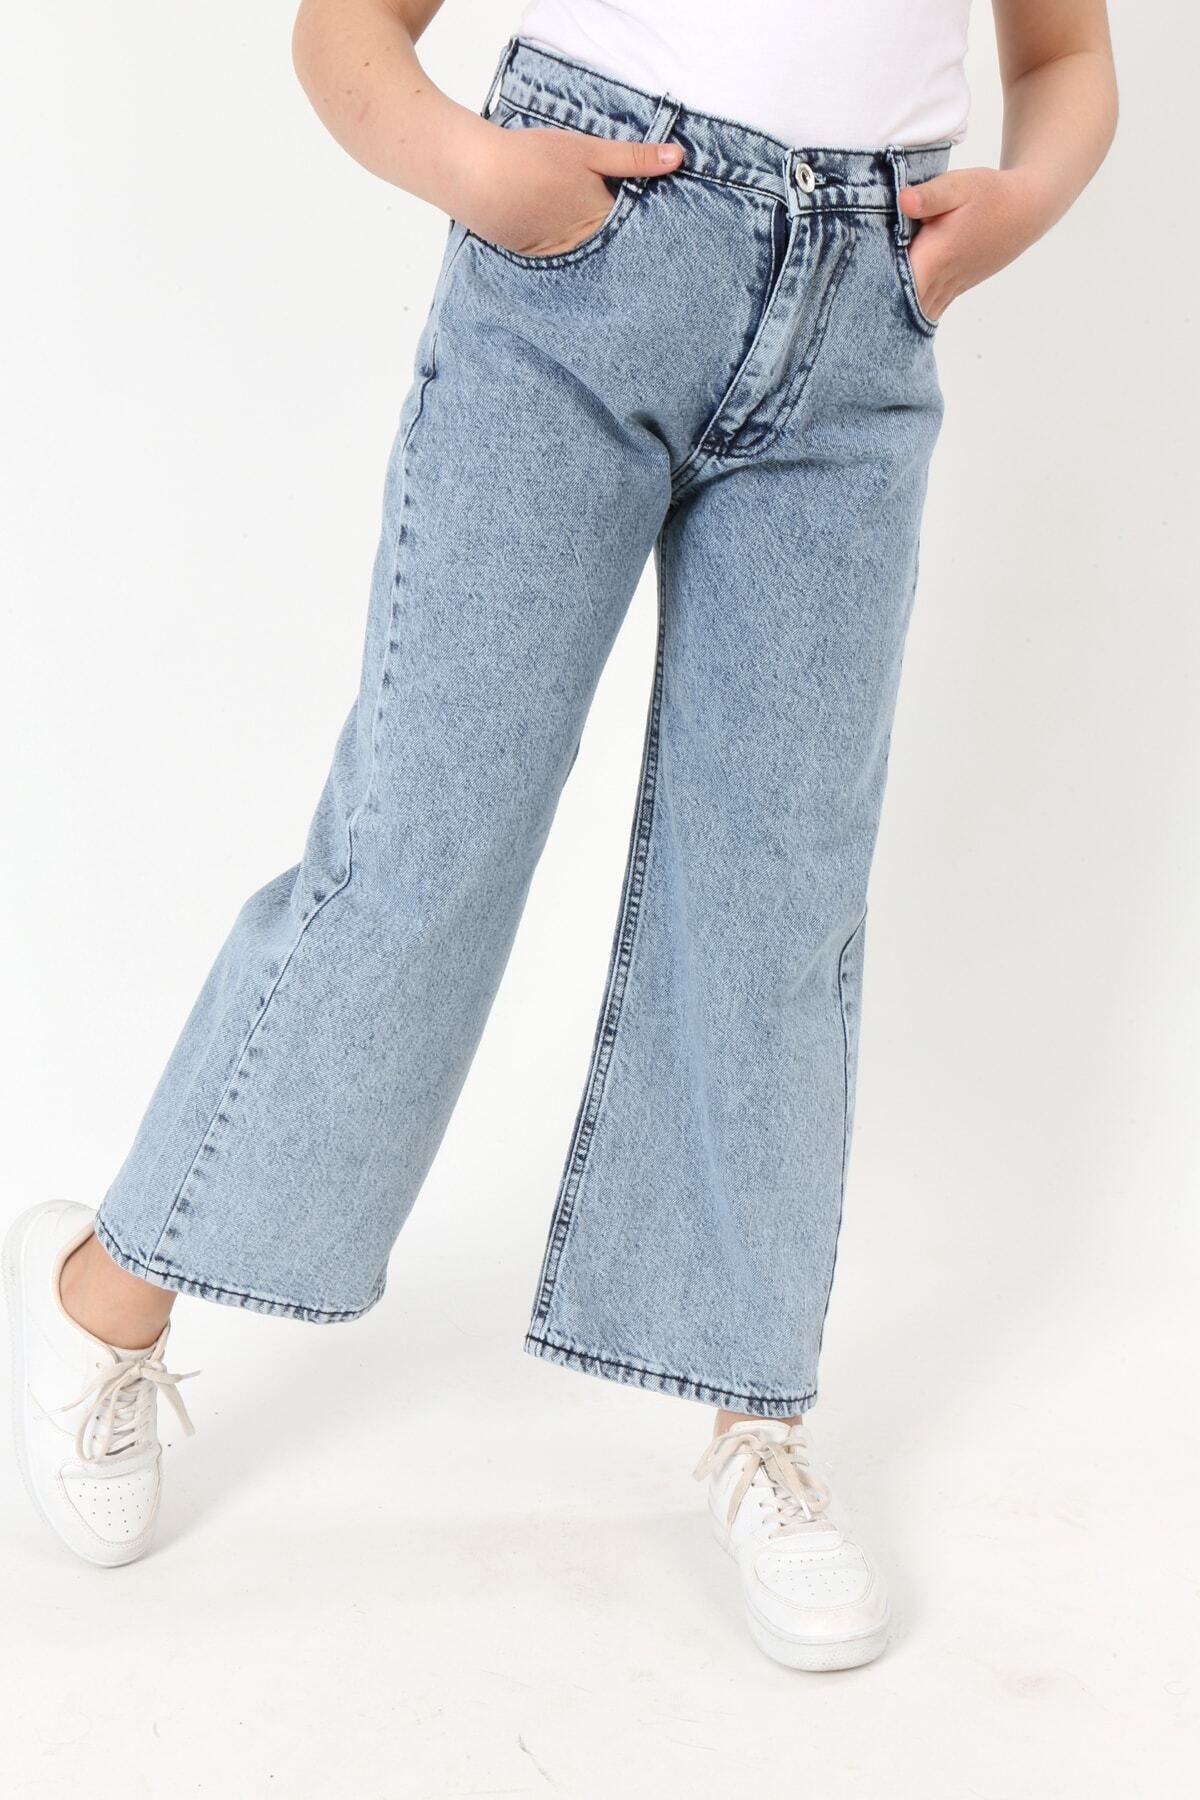 Asortik Kids Çocuk Mom Jeans Kot Pantolon Yüksek Bel Geniş Kesim